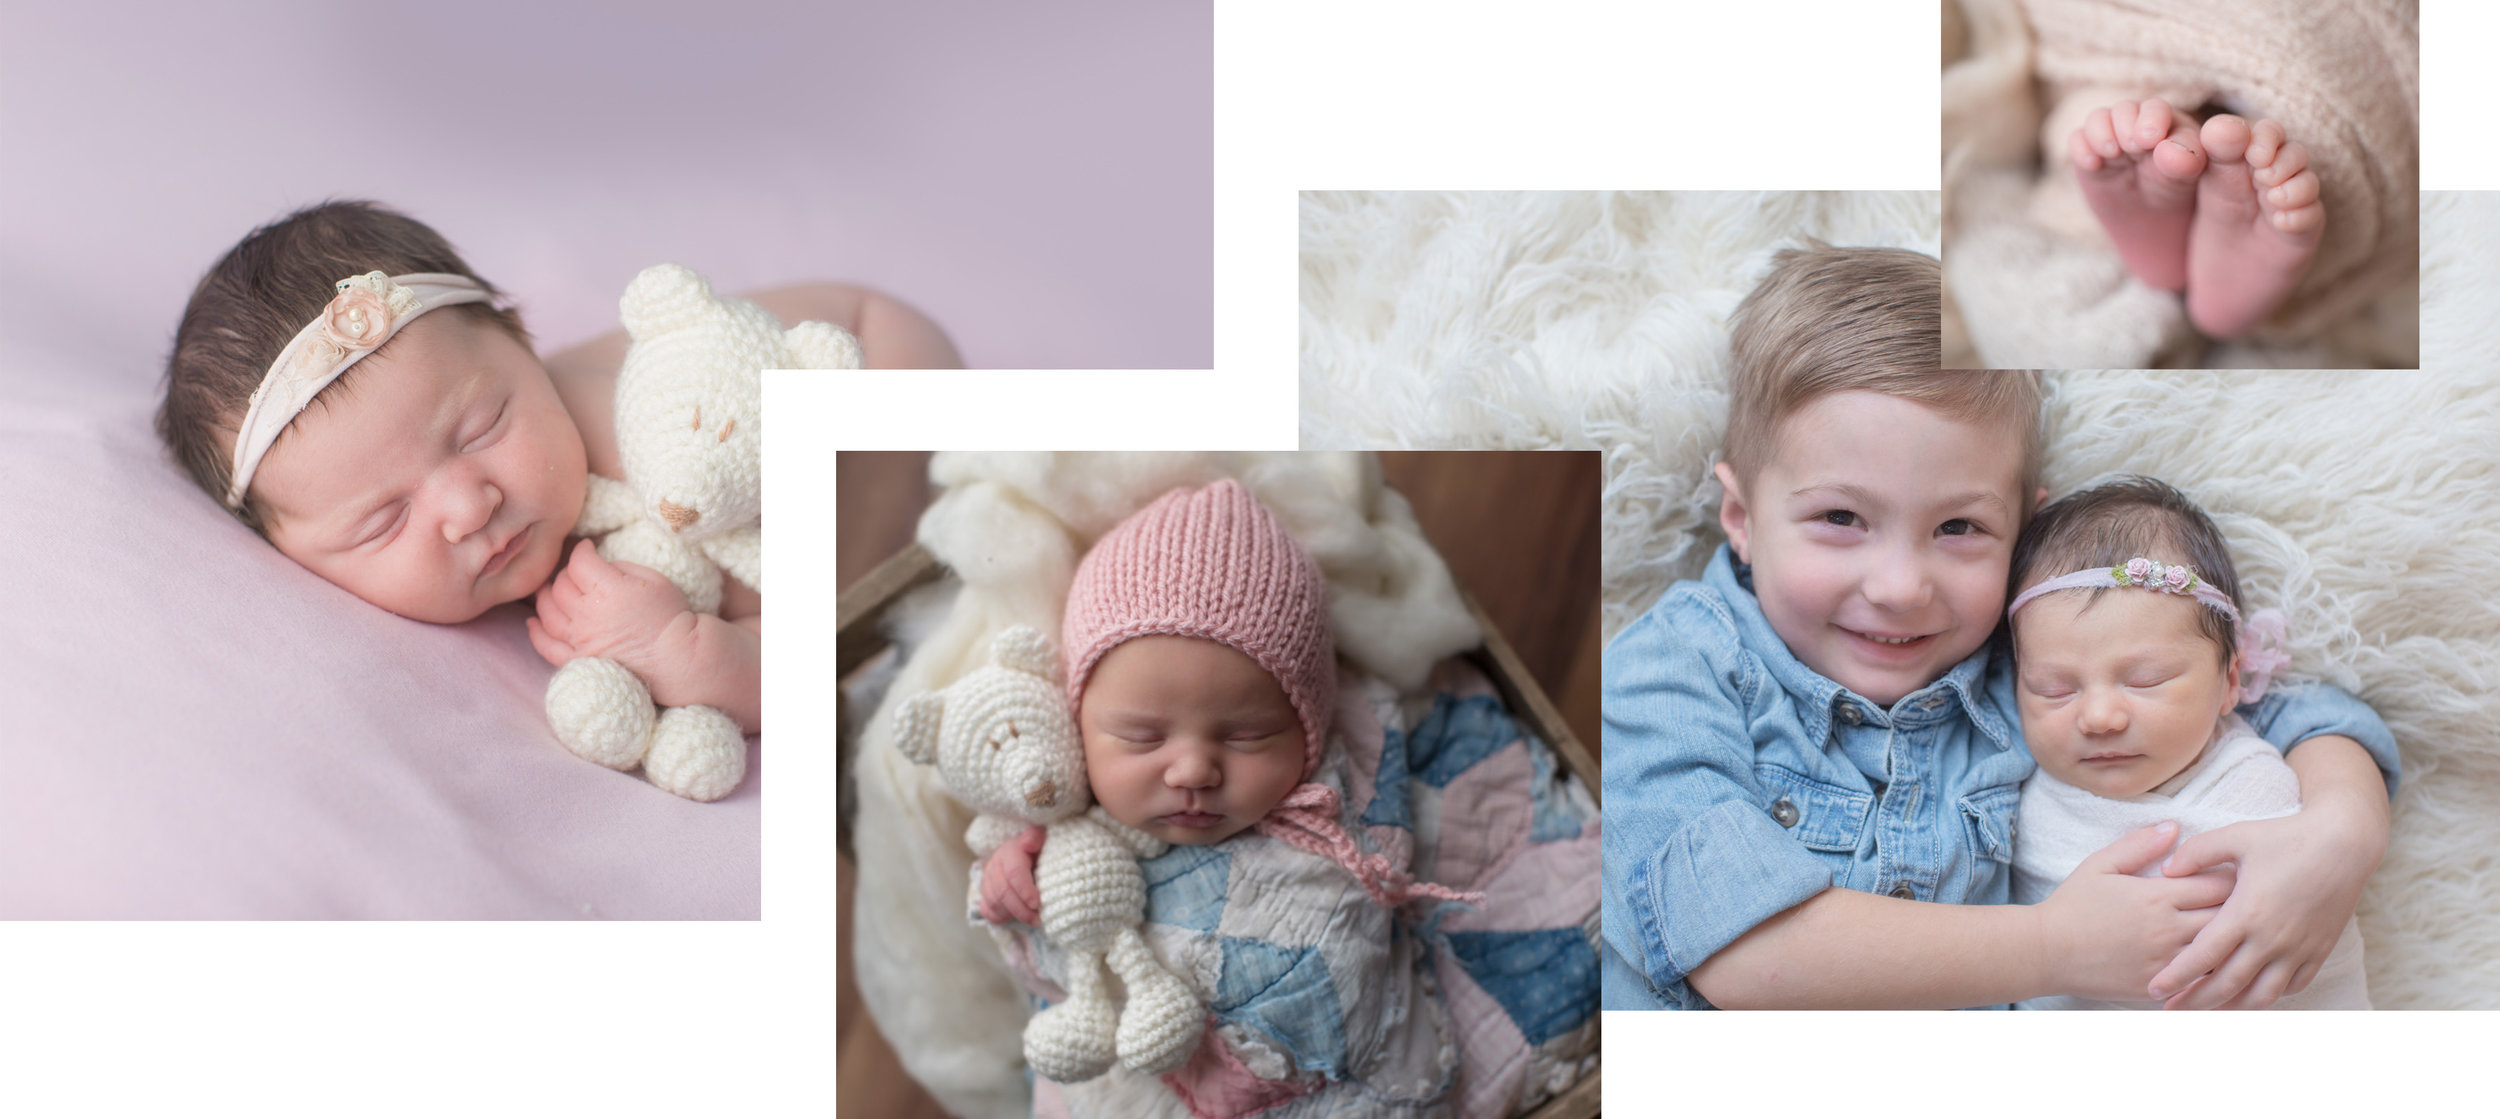 Flint baby photographer capturing professional baby photos